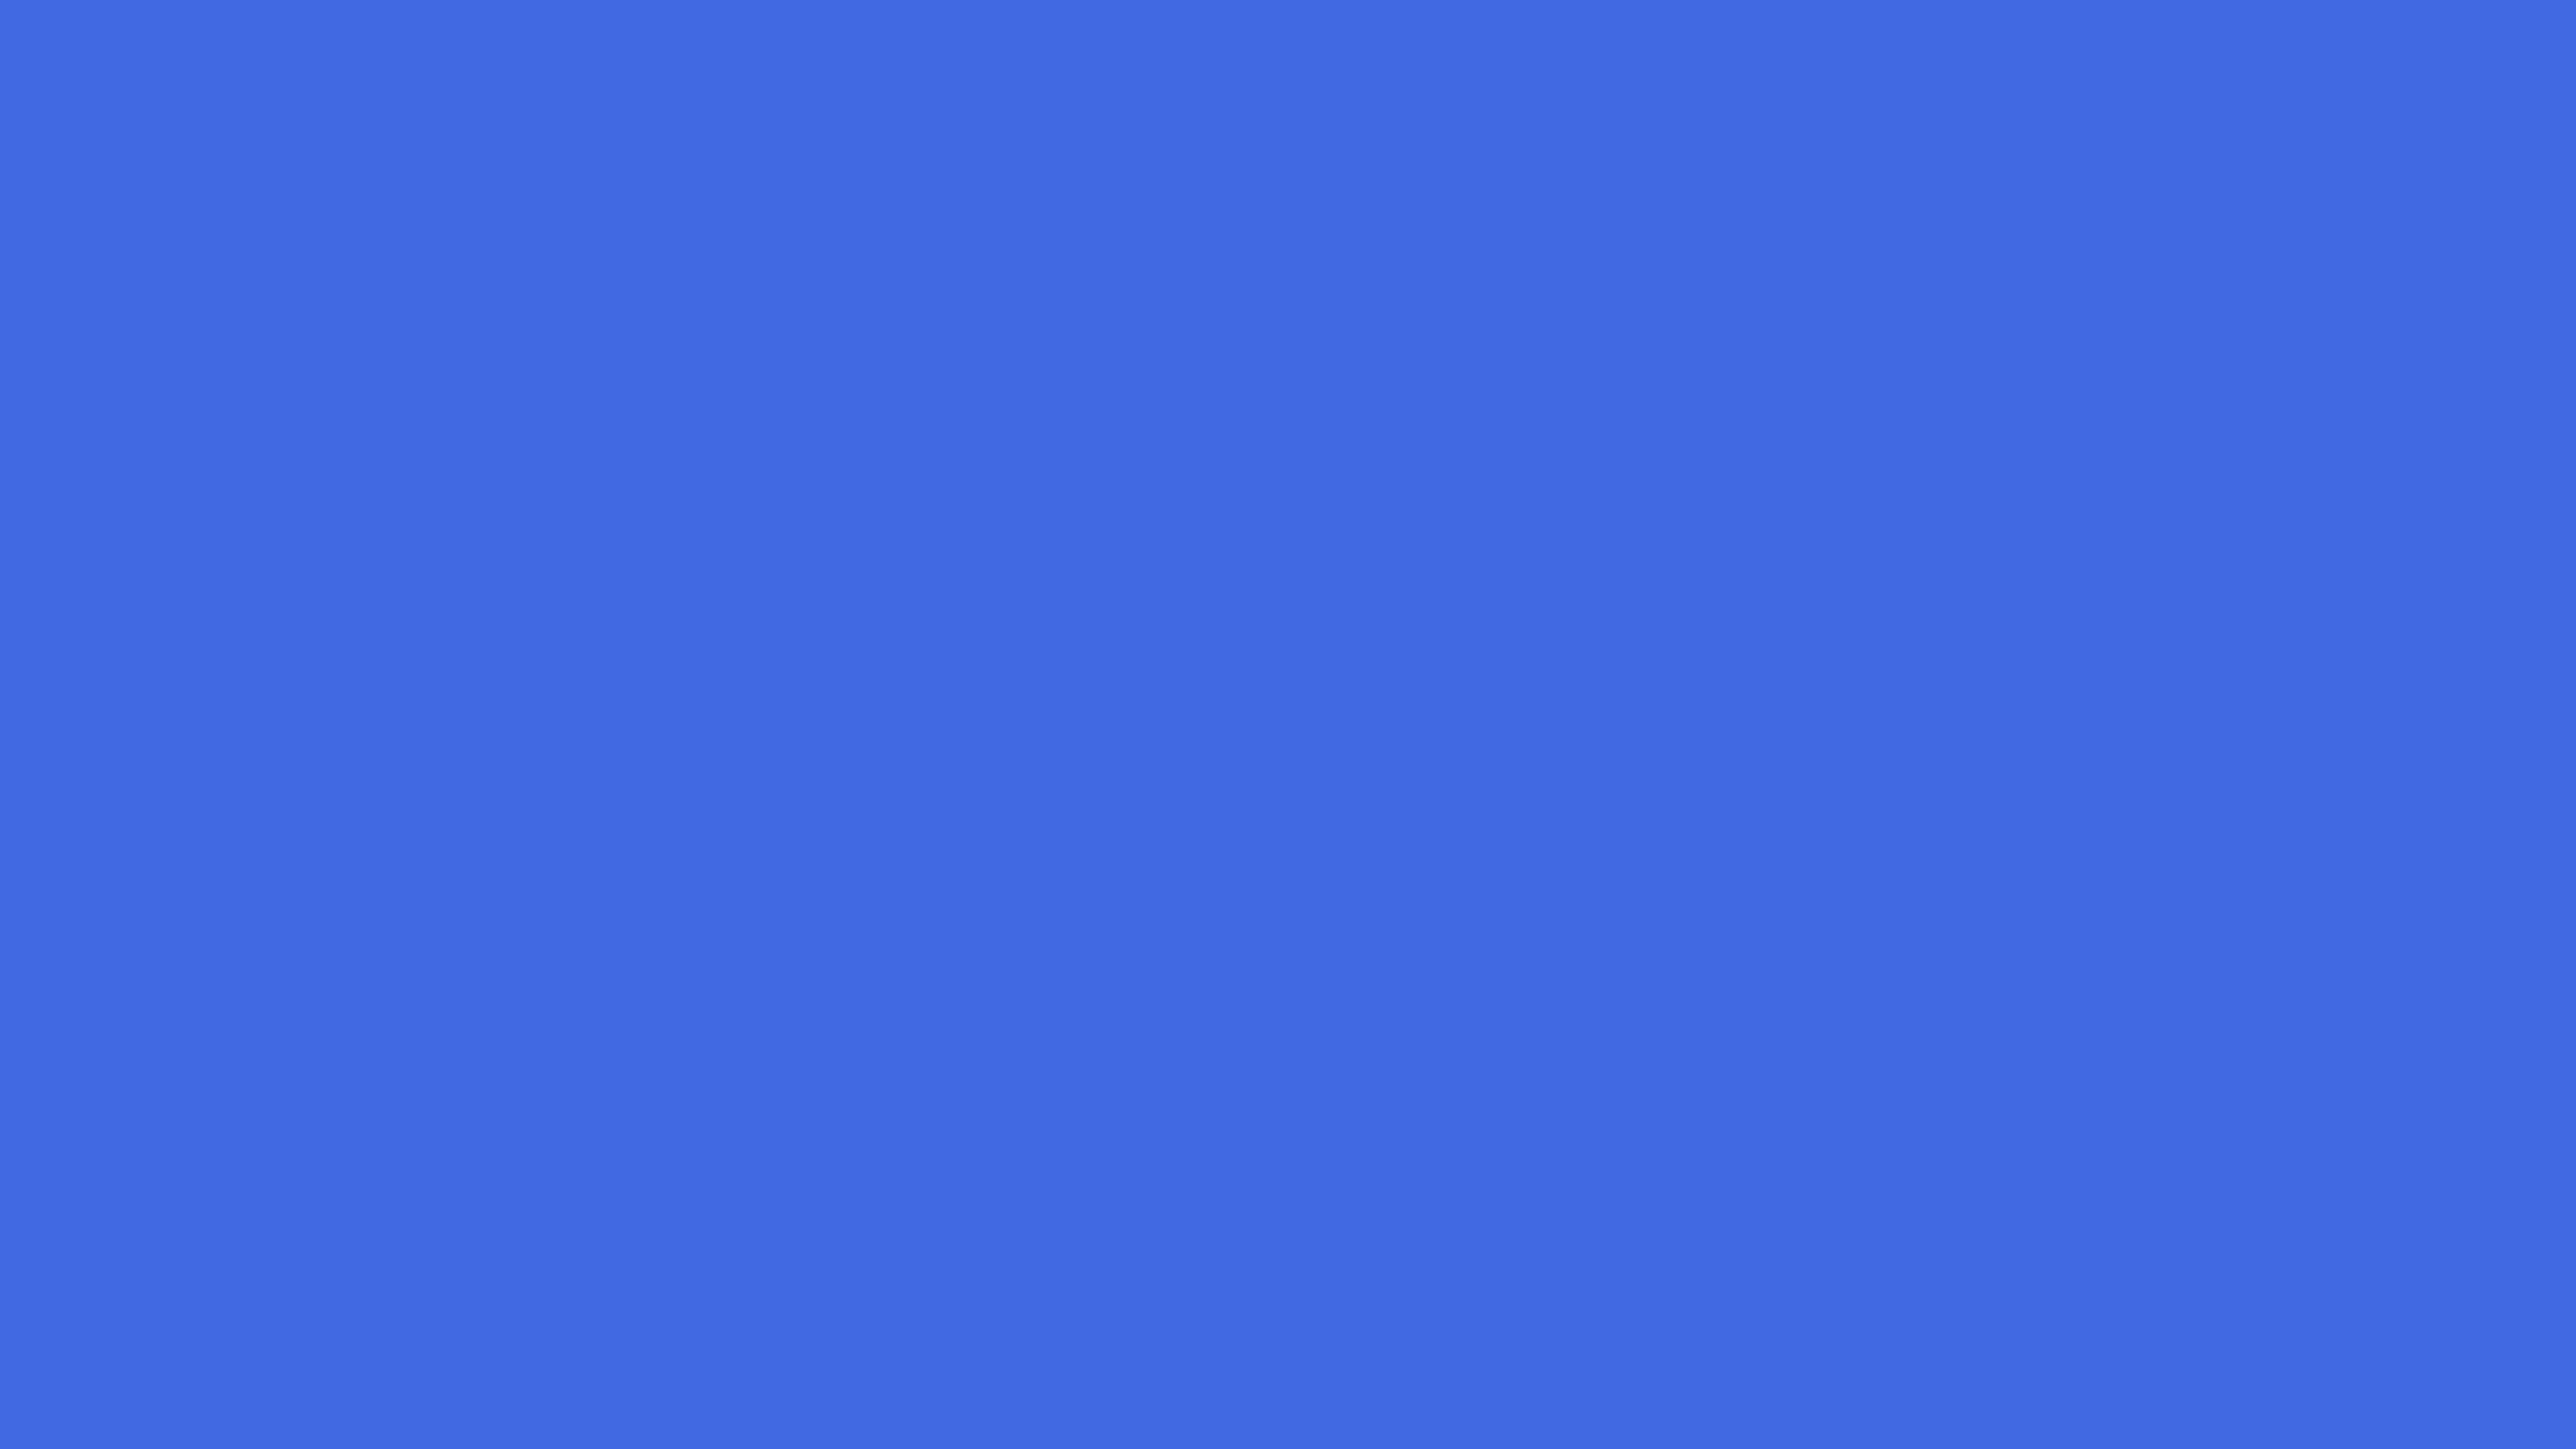 Royal Blue Solid Color Background Image | Free Image Generator